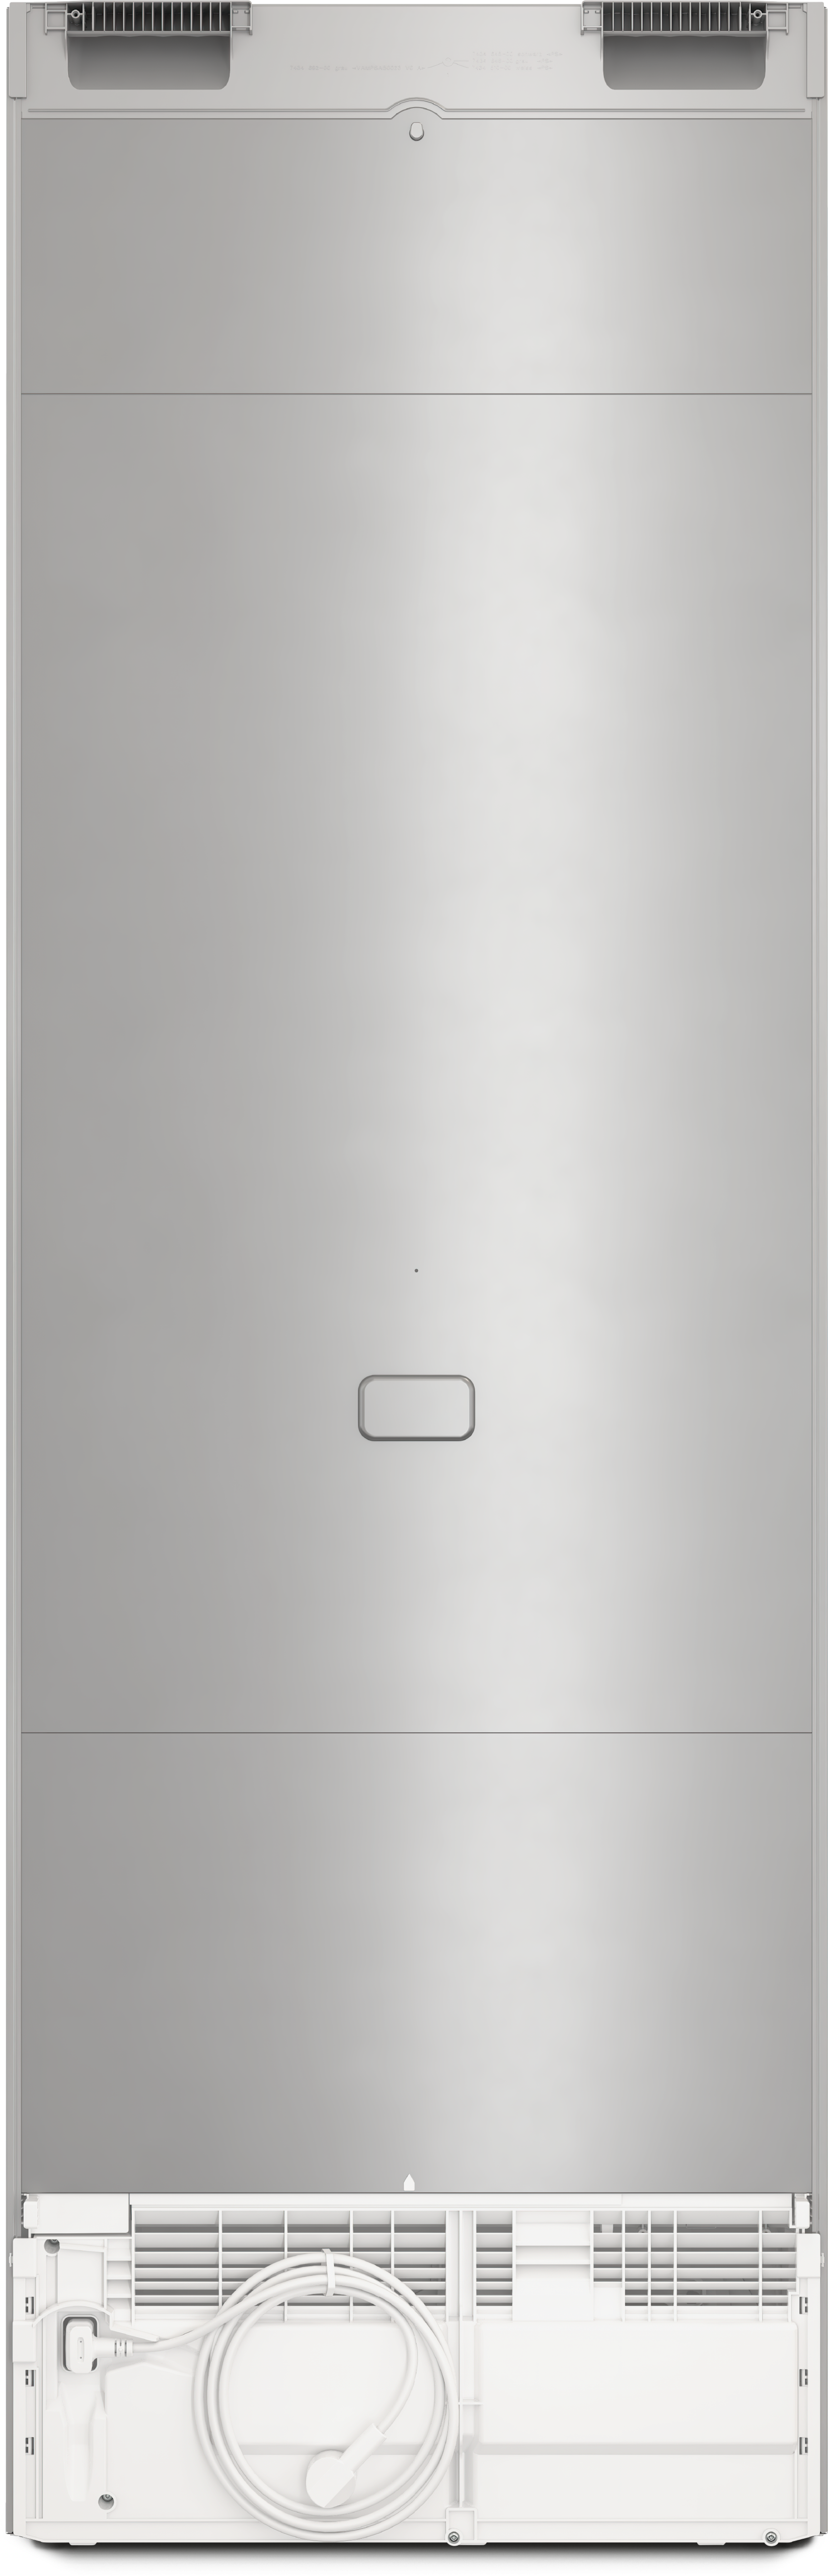 Refrigeration - KS 4383 ED Stainless look - 4